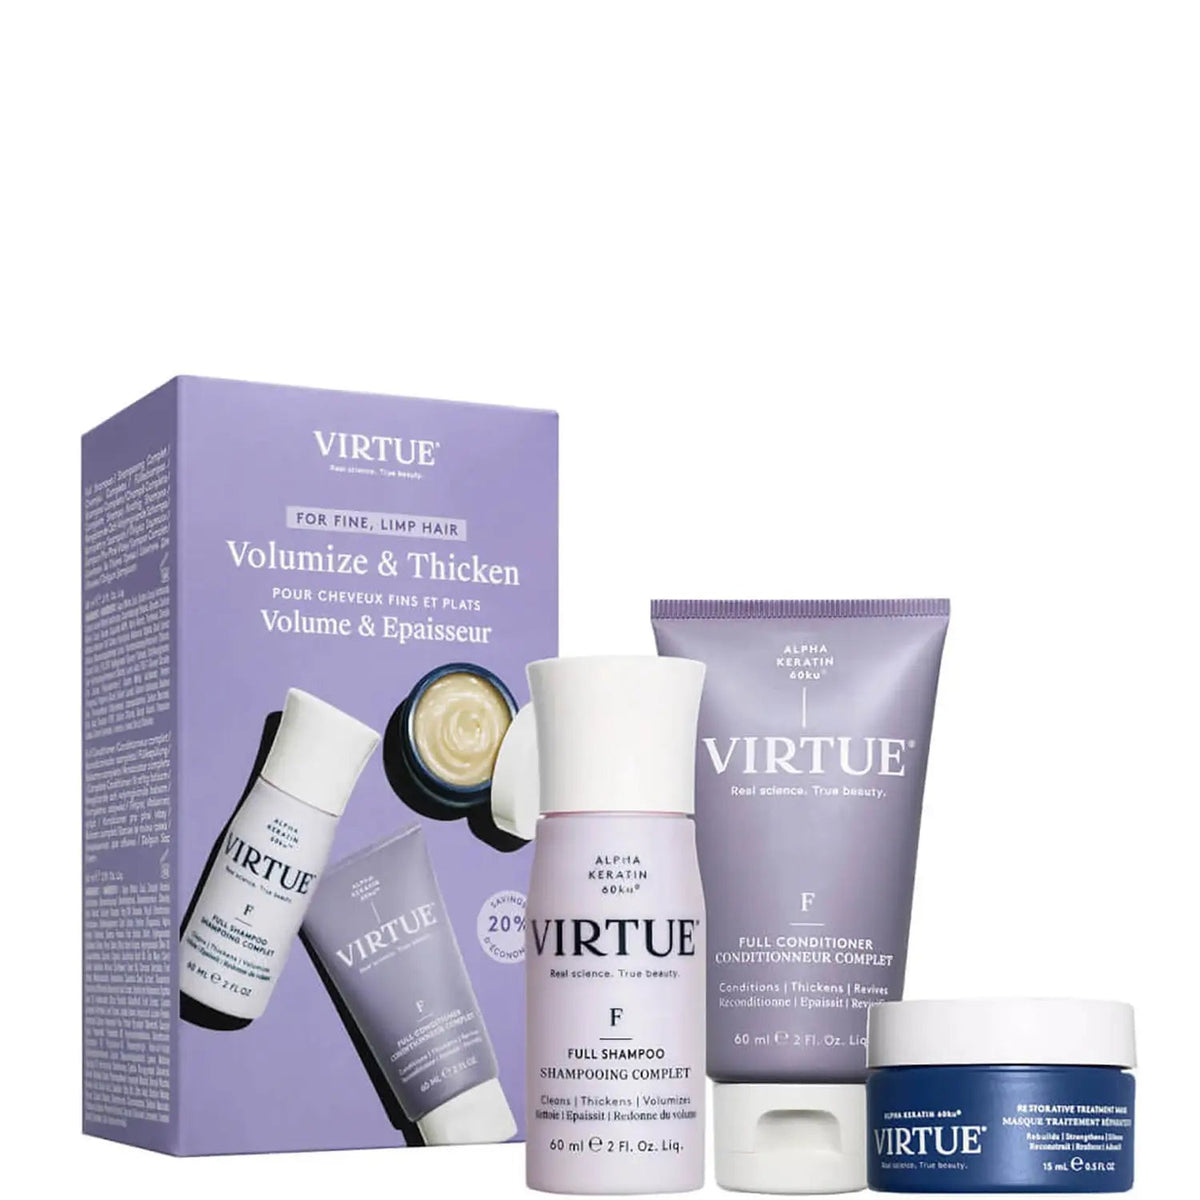 Virtue Full Discovery Kit - Blend Box